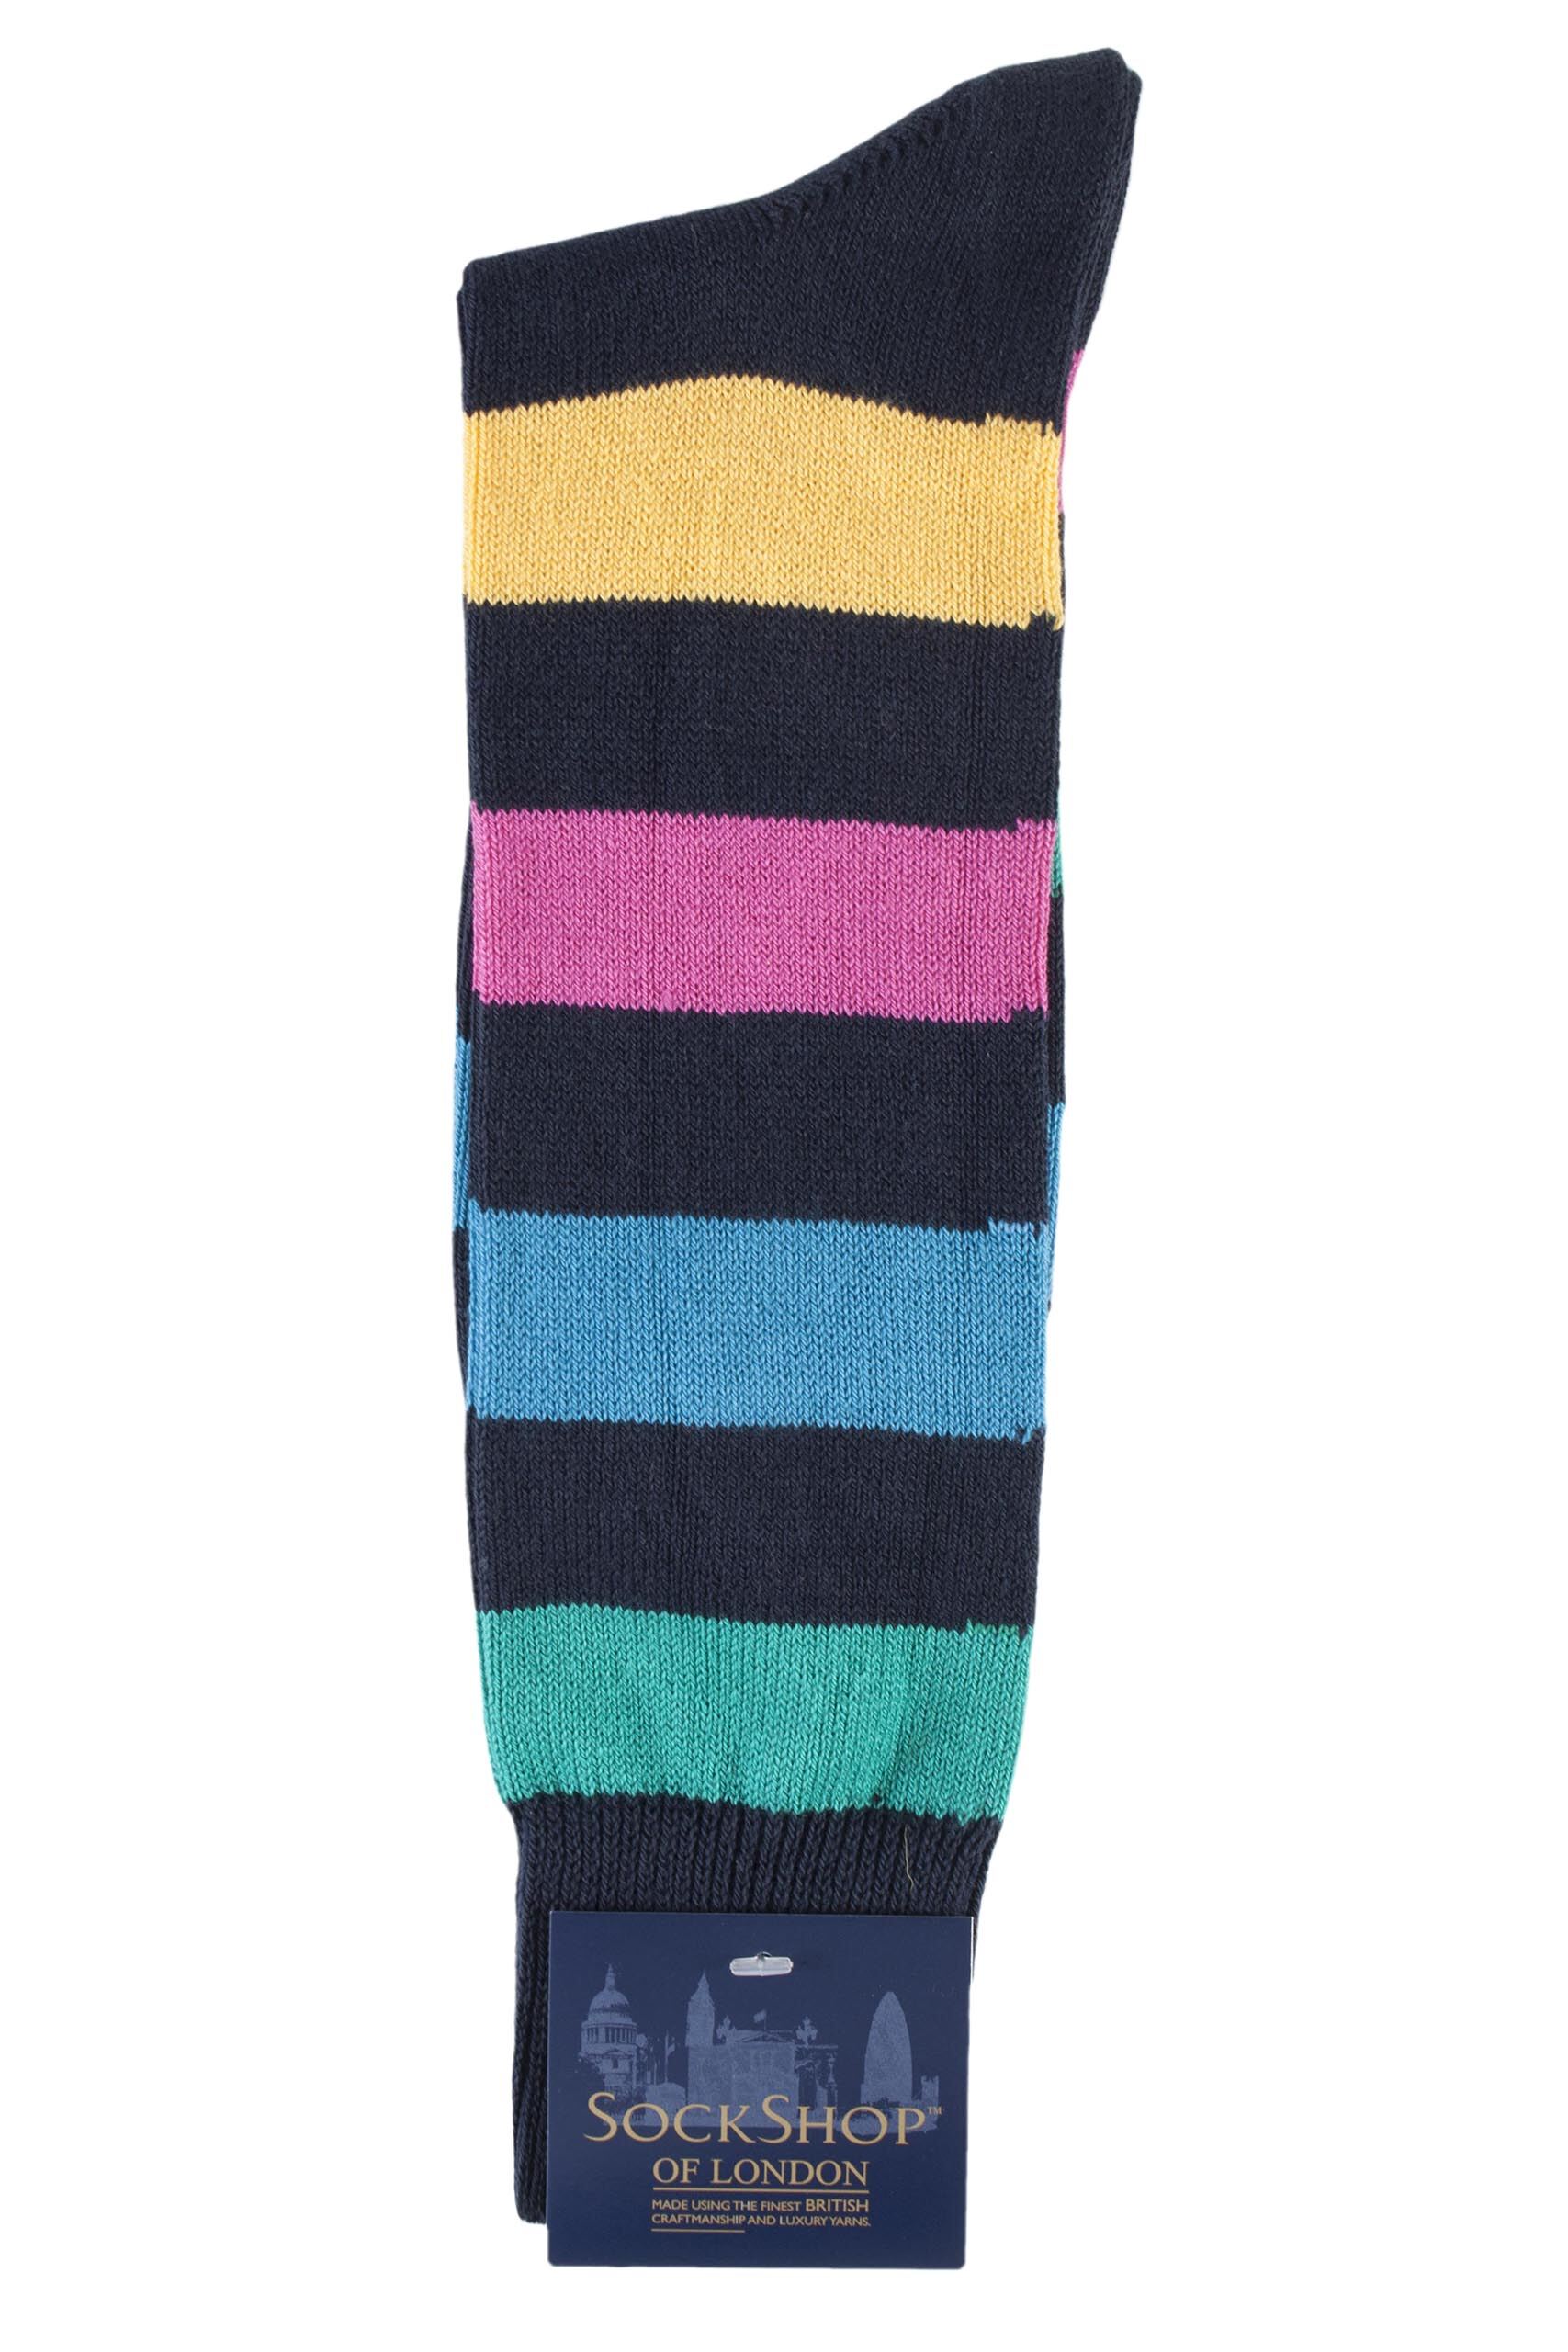  Sockshop of London Bold Broad Stripe Cotton Socks